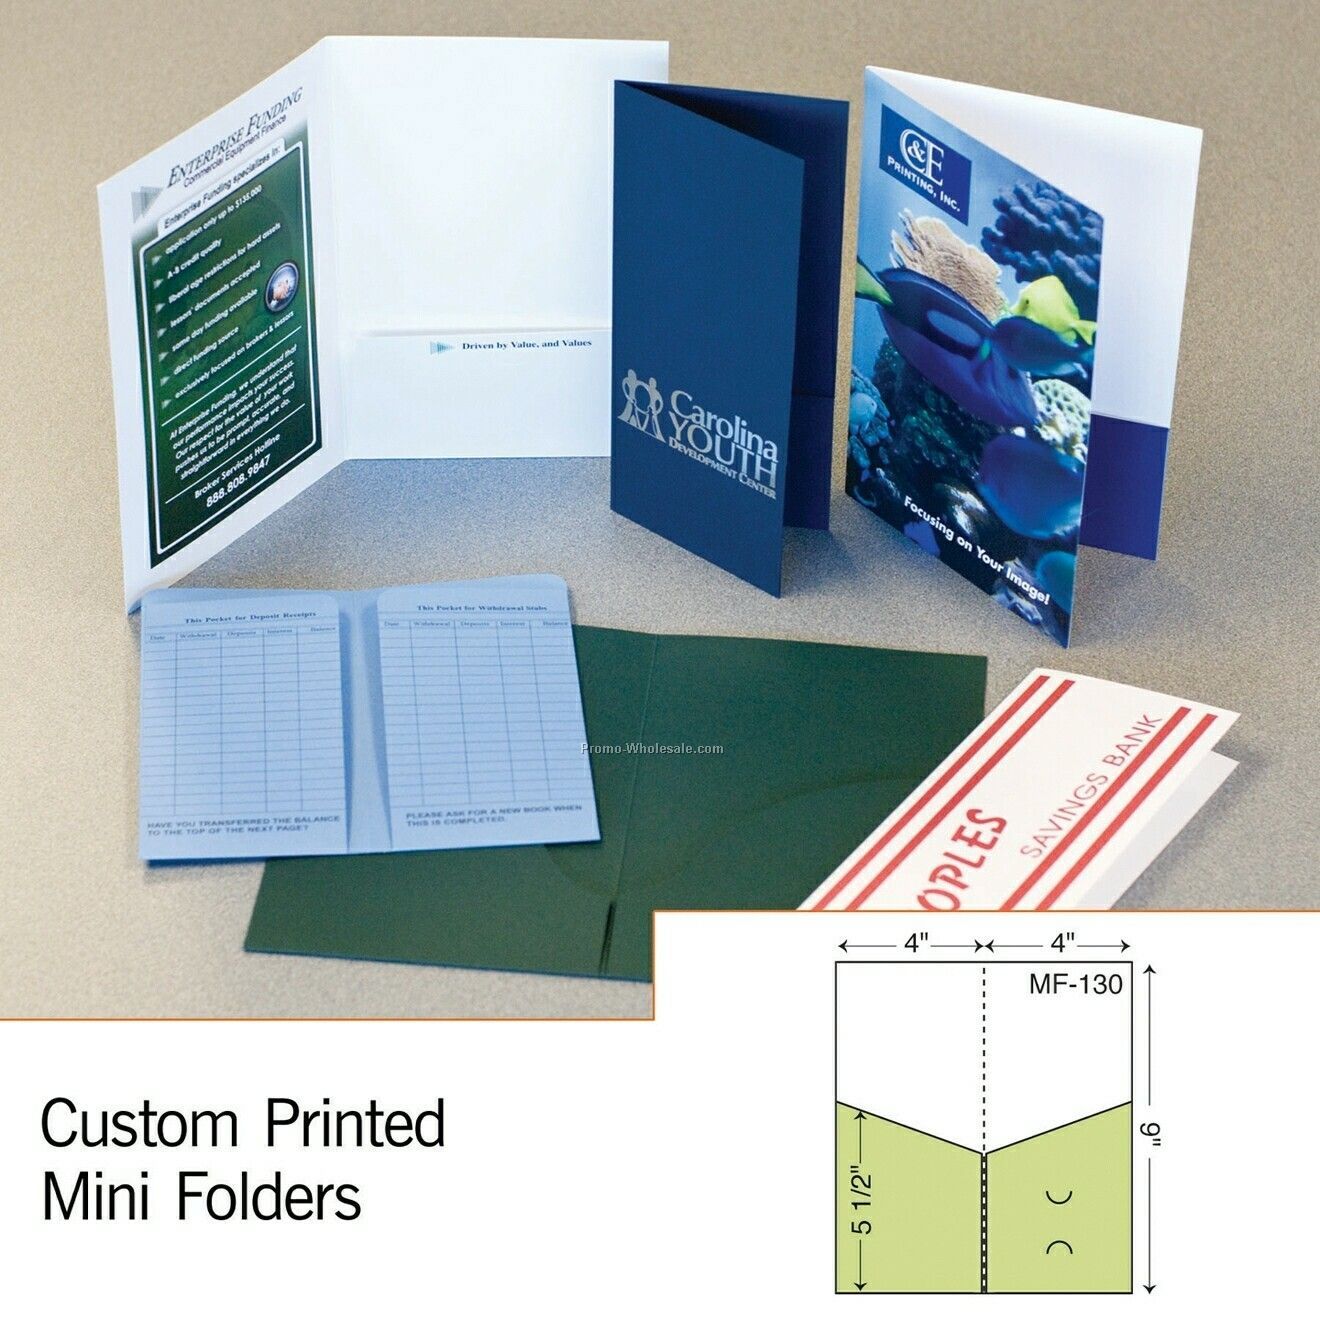 4"x9" Mini Folder W/ Double Pocket (2 Color)